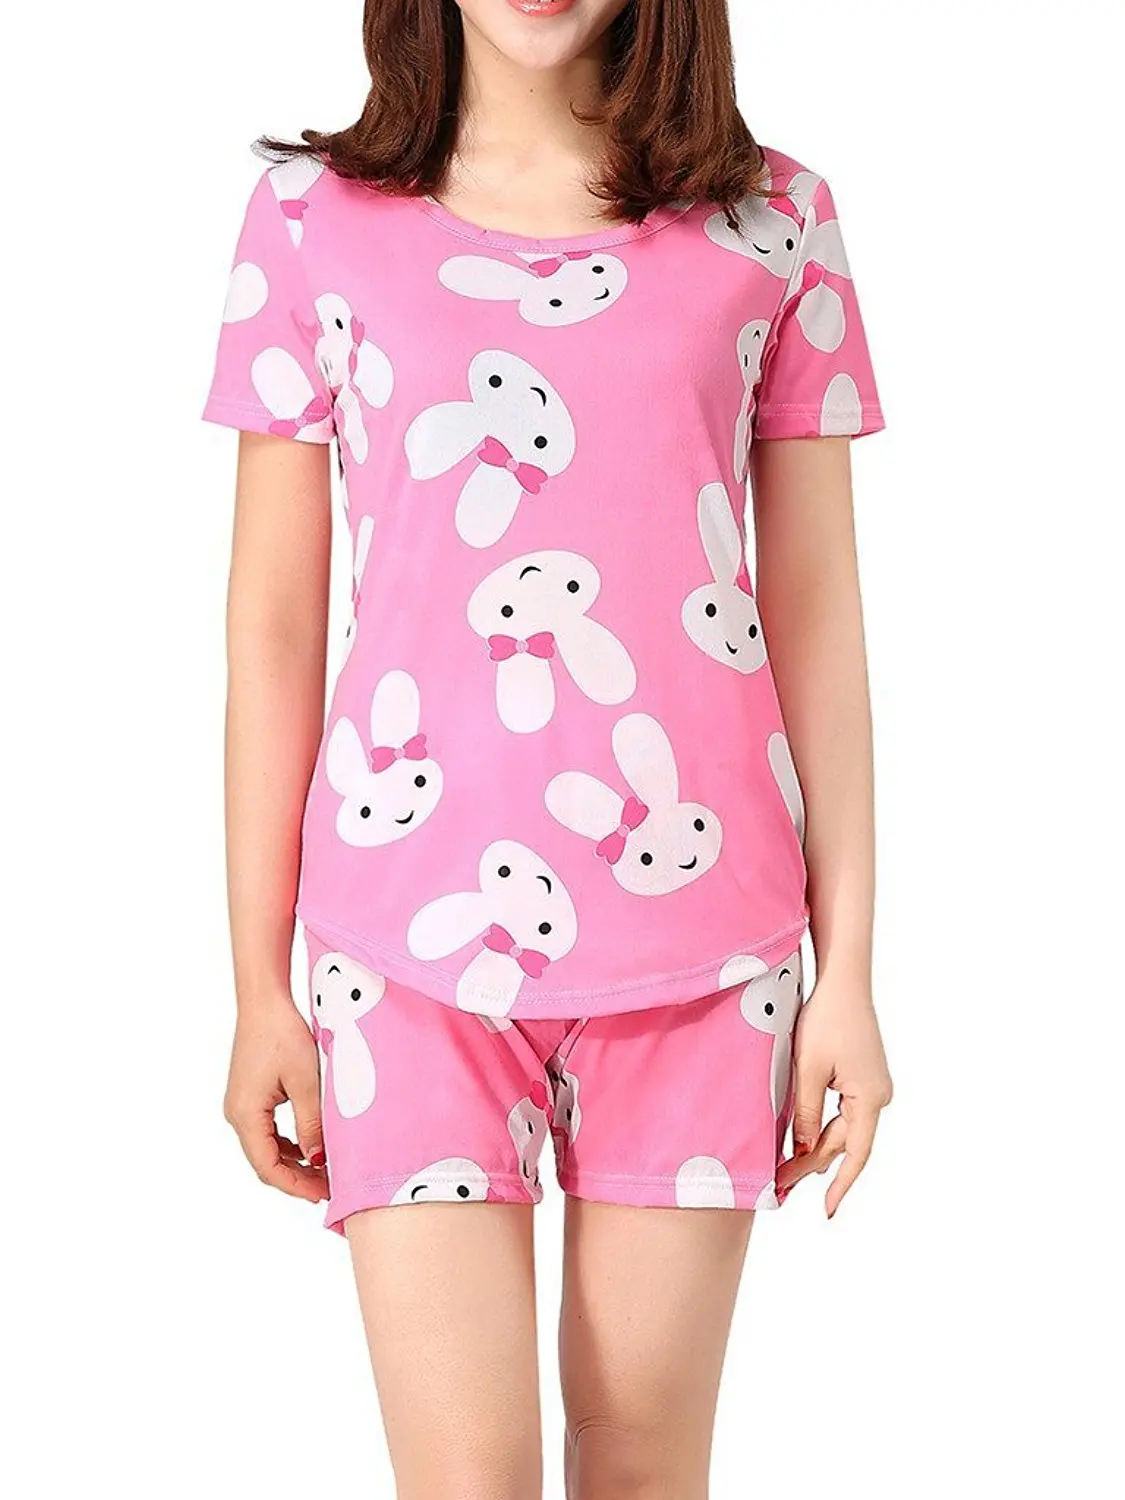 Cheap Cute Pajama Short Sets, find Cute Pajama Short Sets deals on line at Alibaba.com